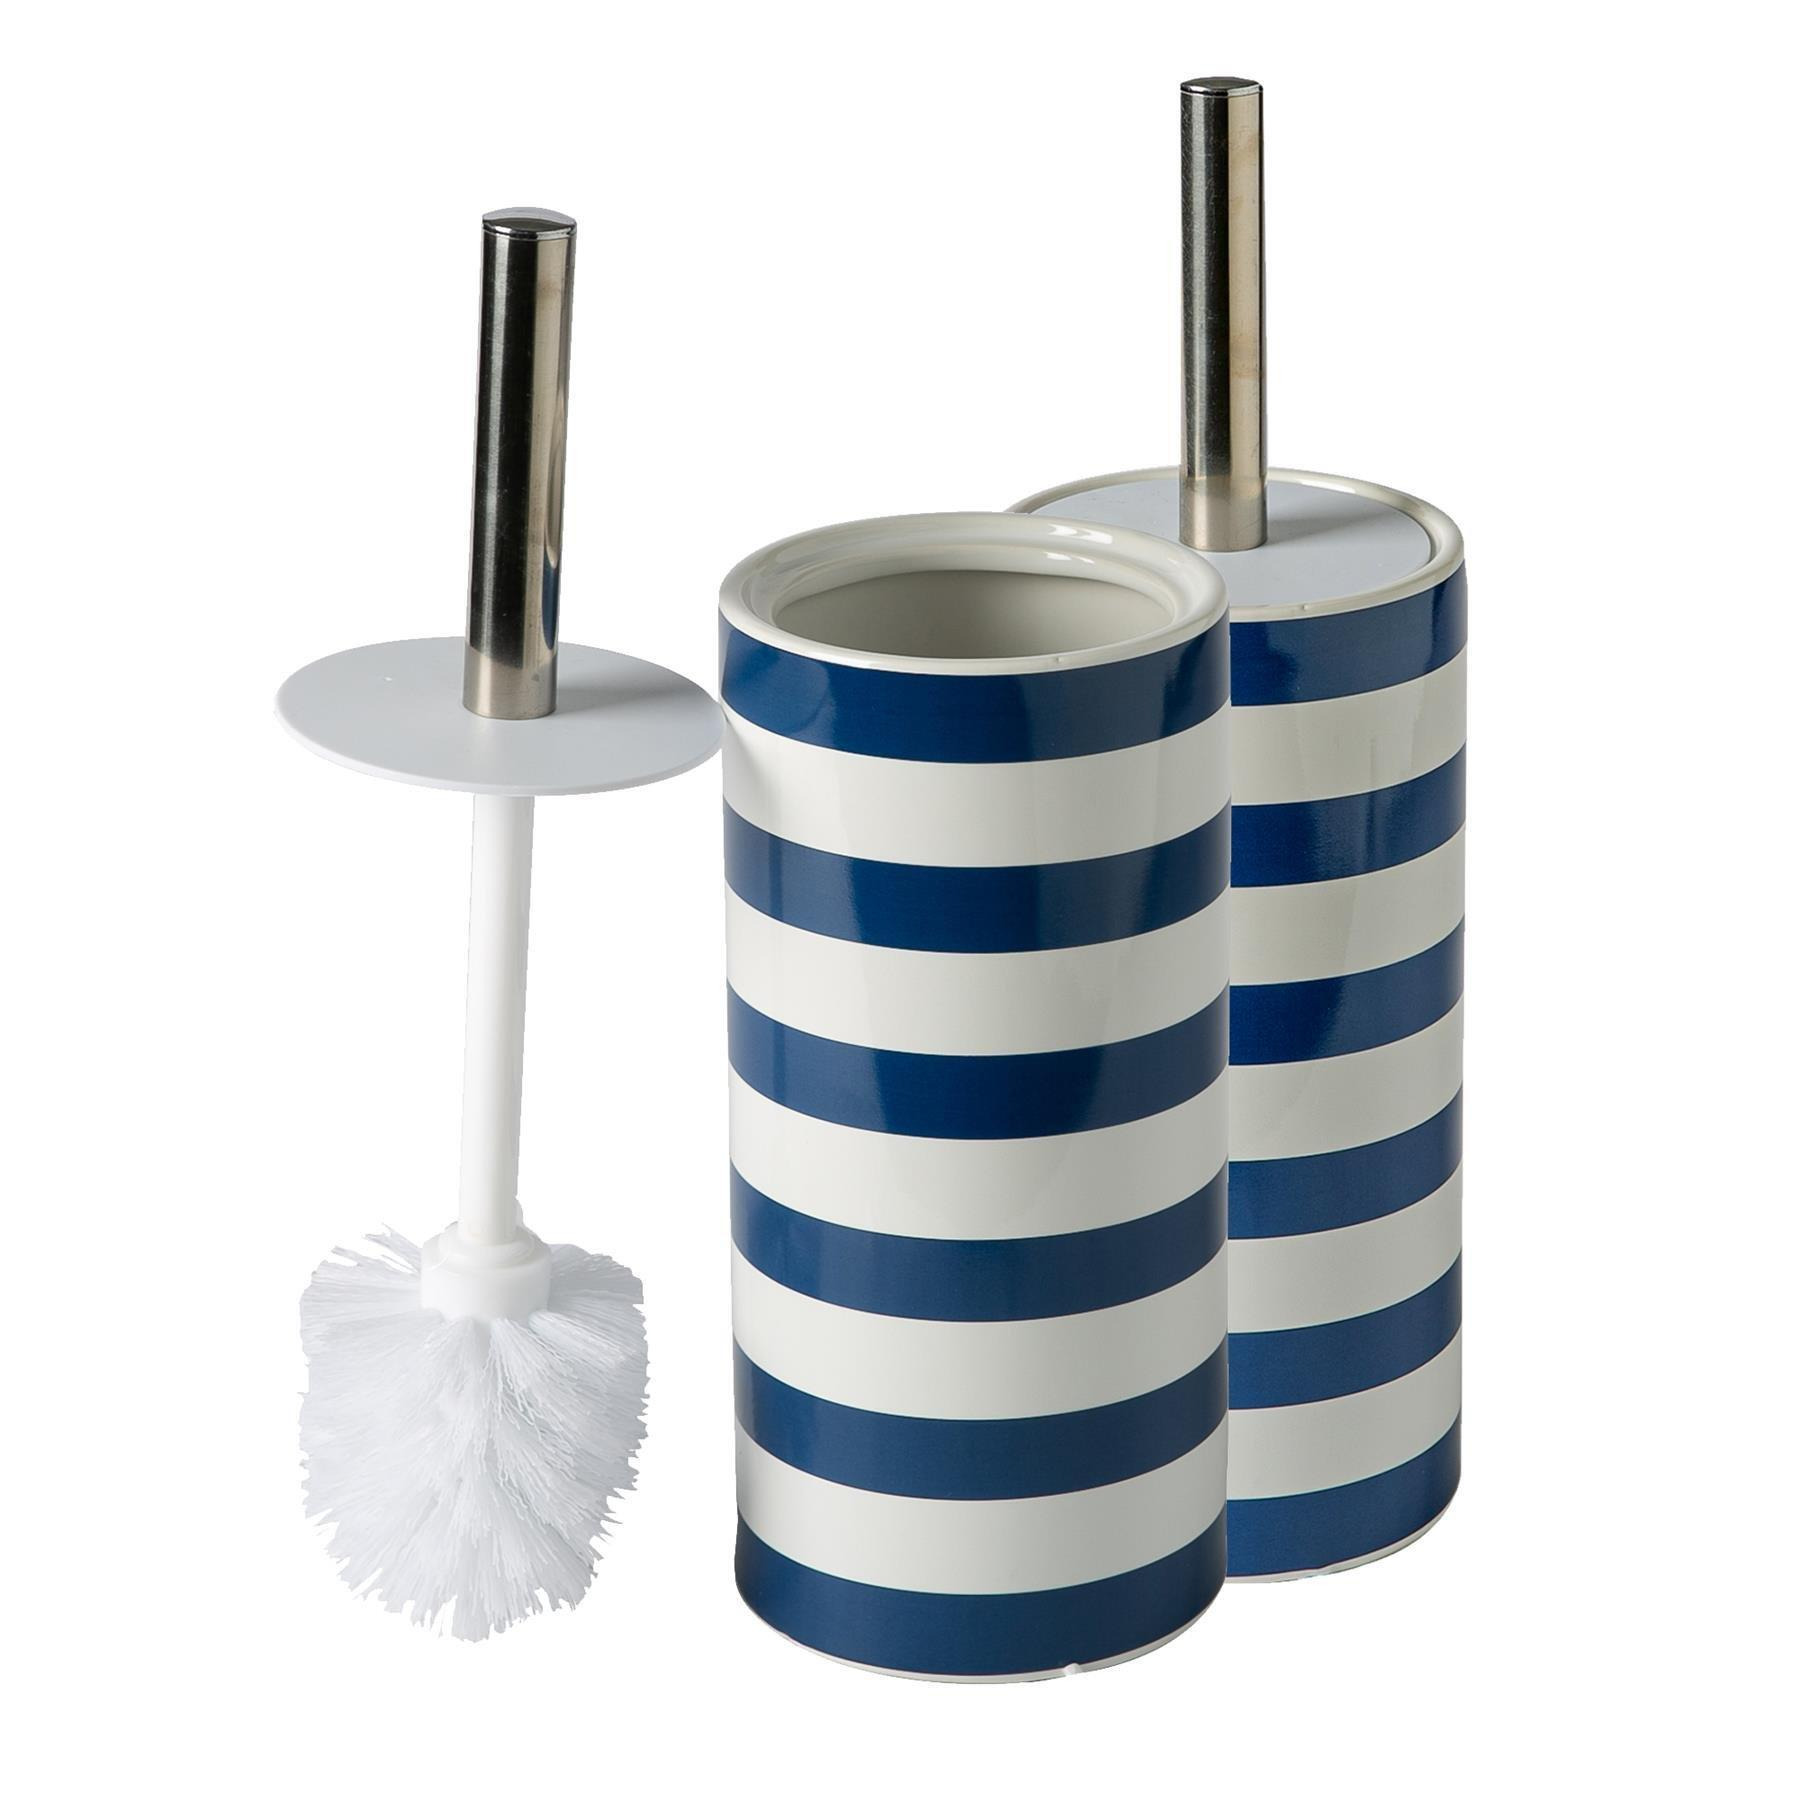 Ceramic Toilet Brushes Pack of 2 - image 1